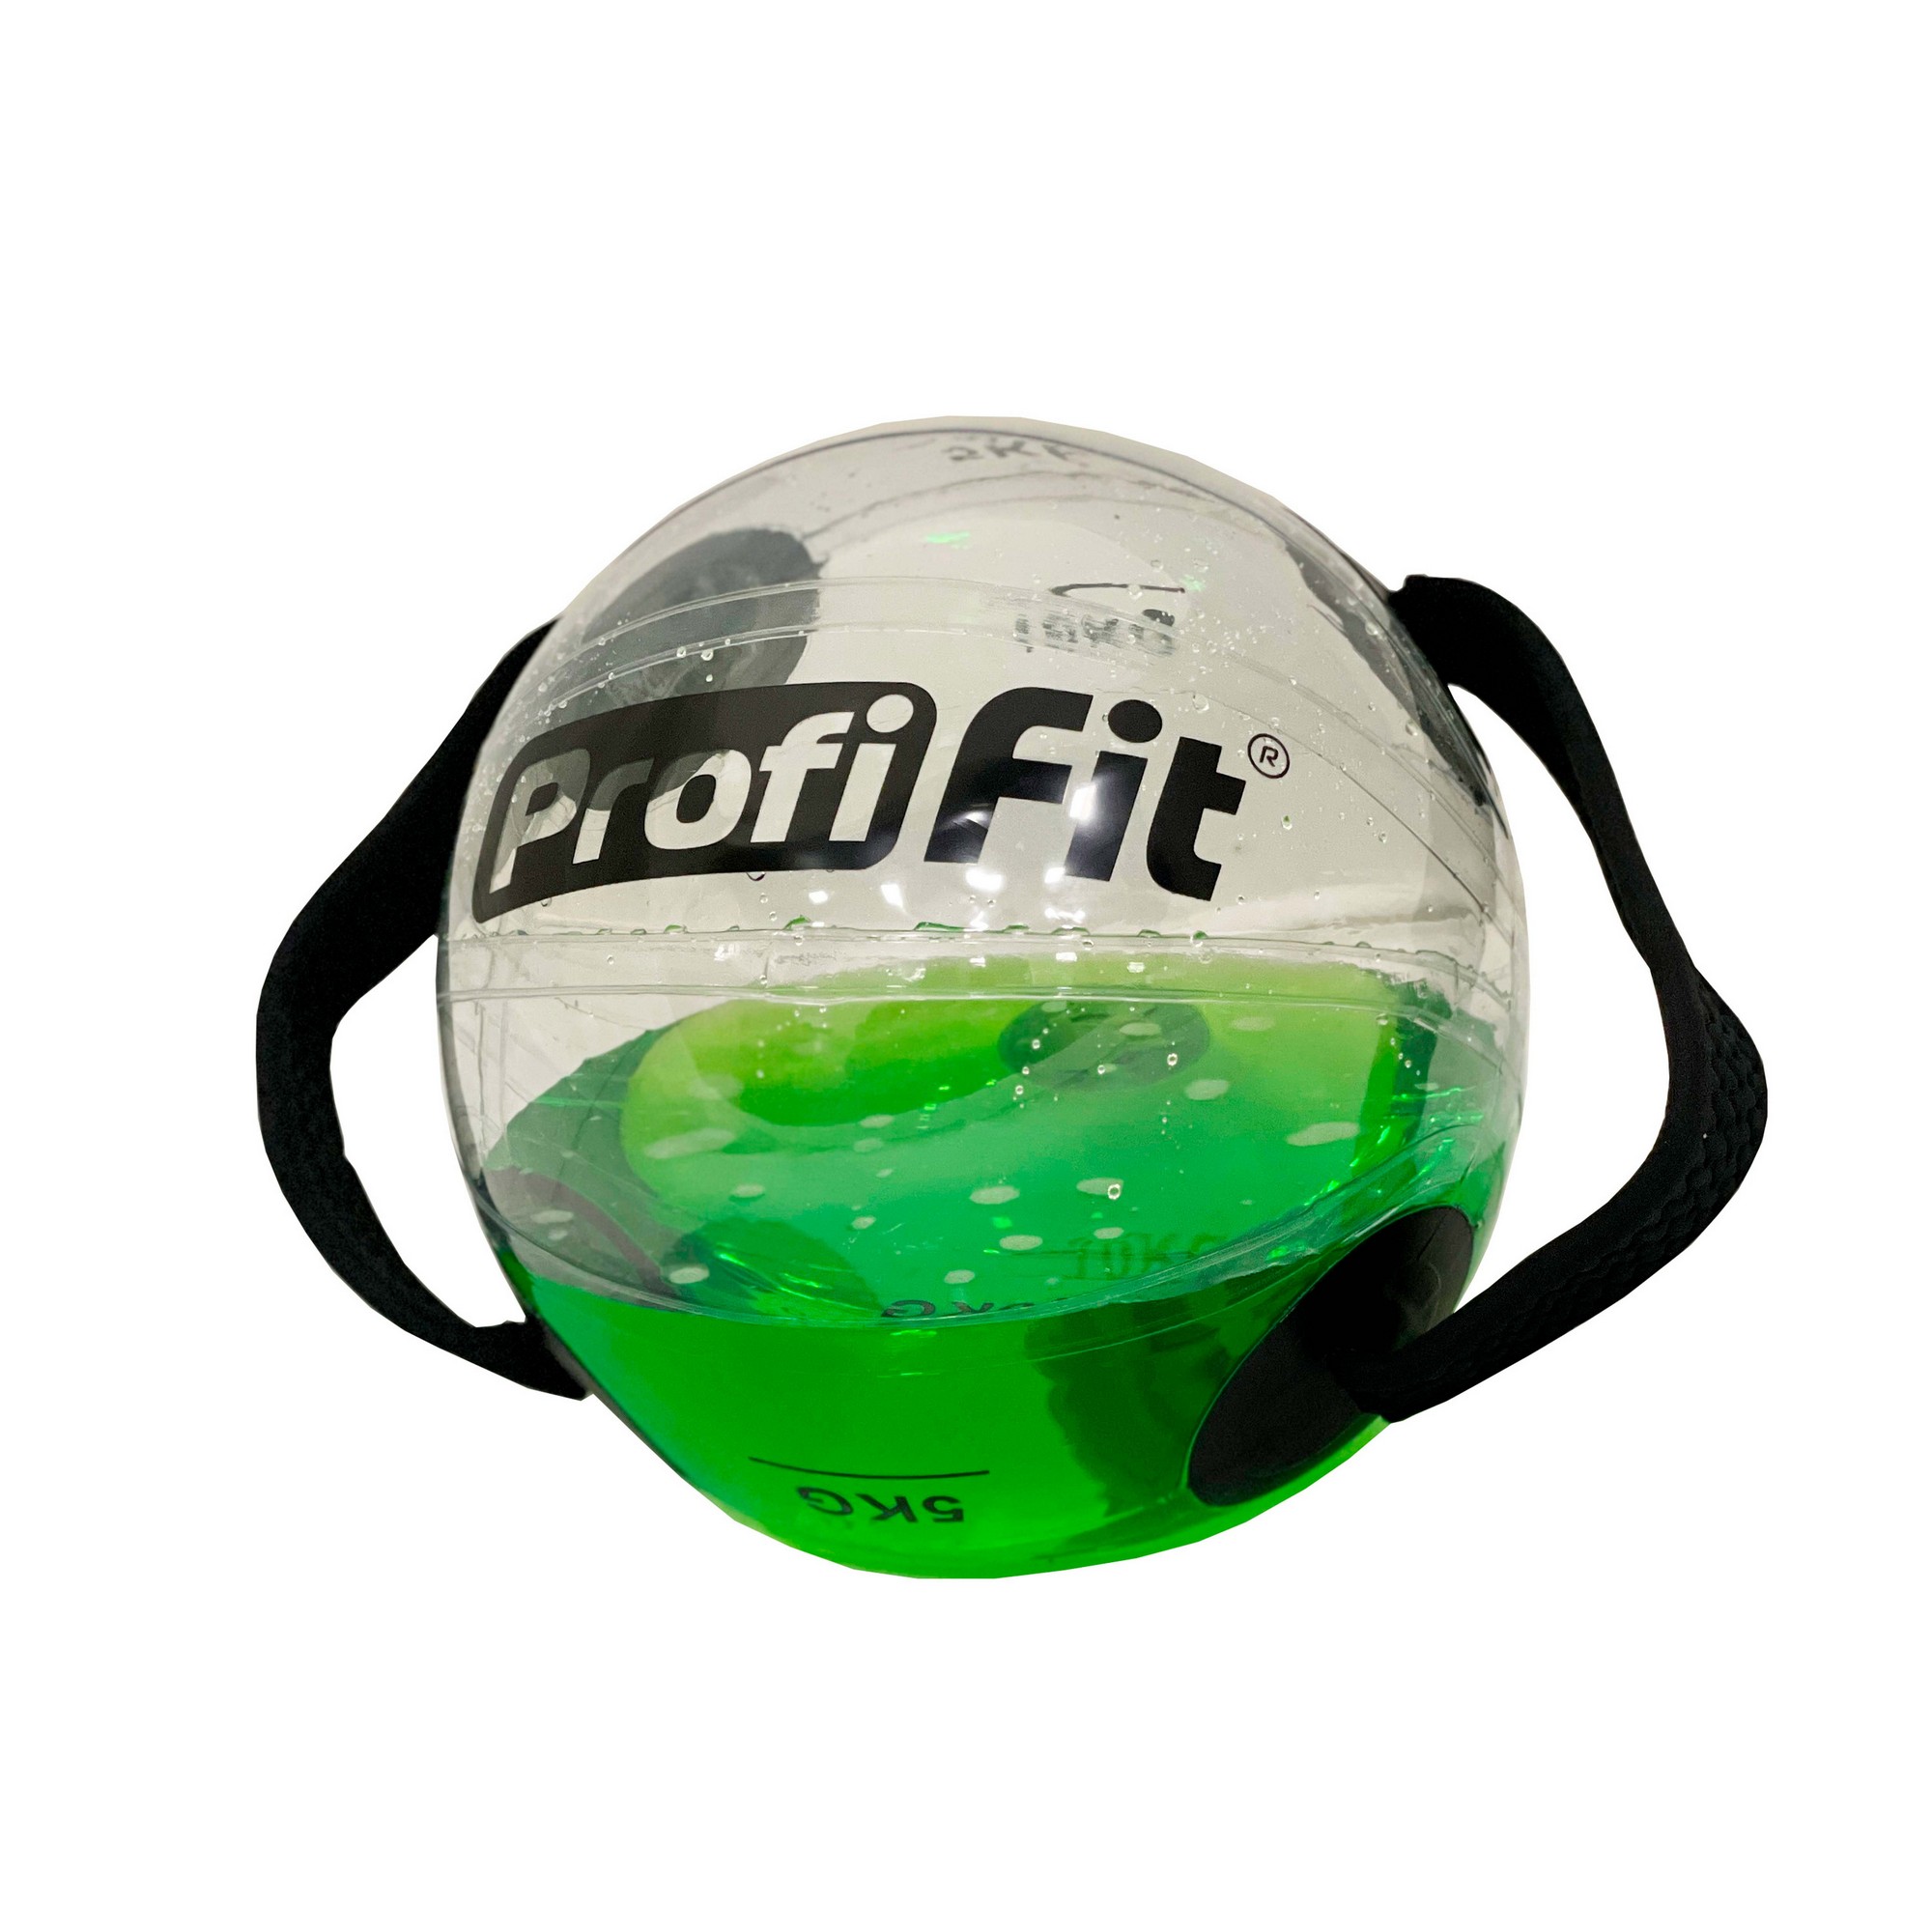     Profi-Fit Water Ball d30 